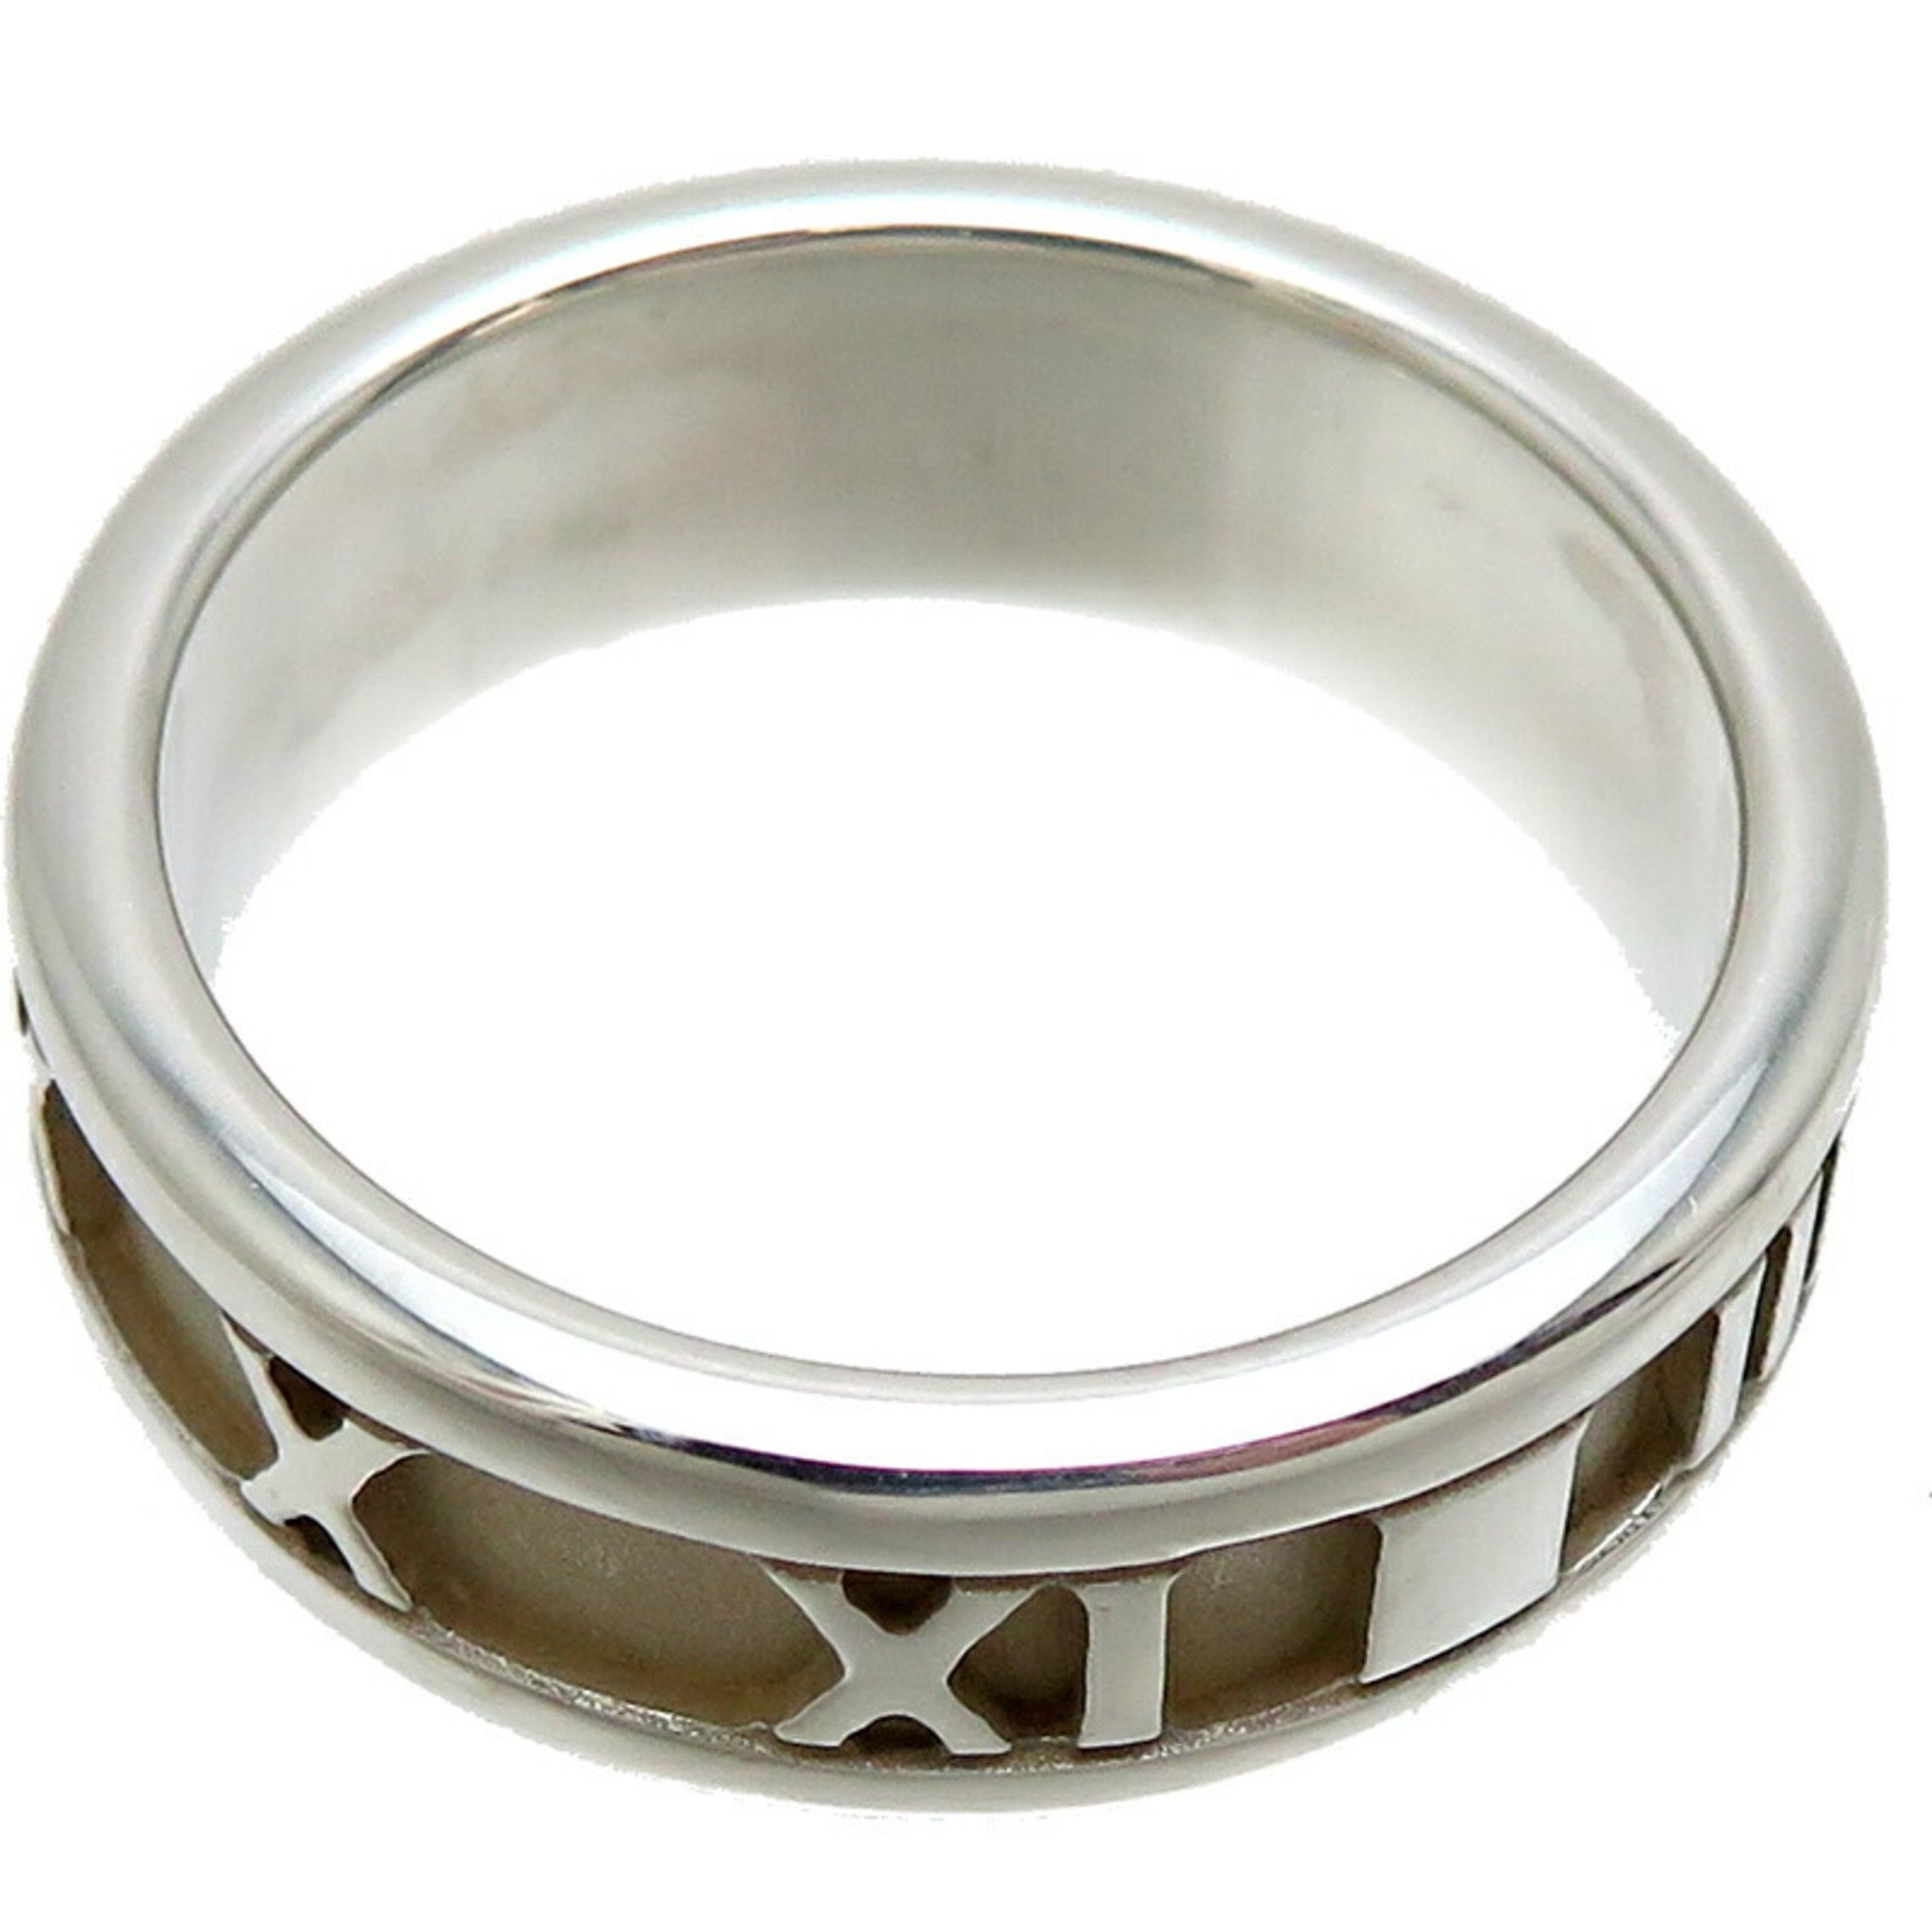 Tiffany SV925 Atlas Narrow Ladies Ring, Silver 925, size 13